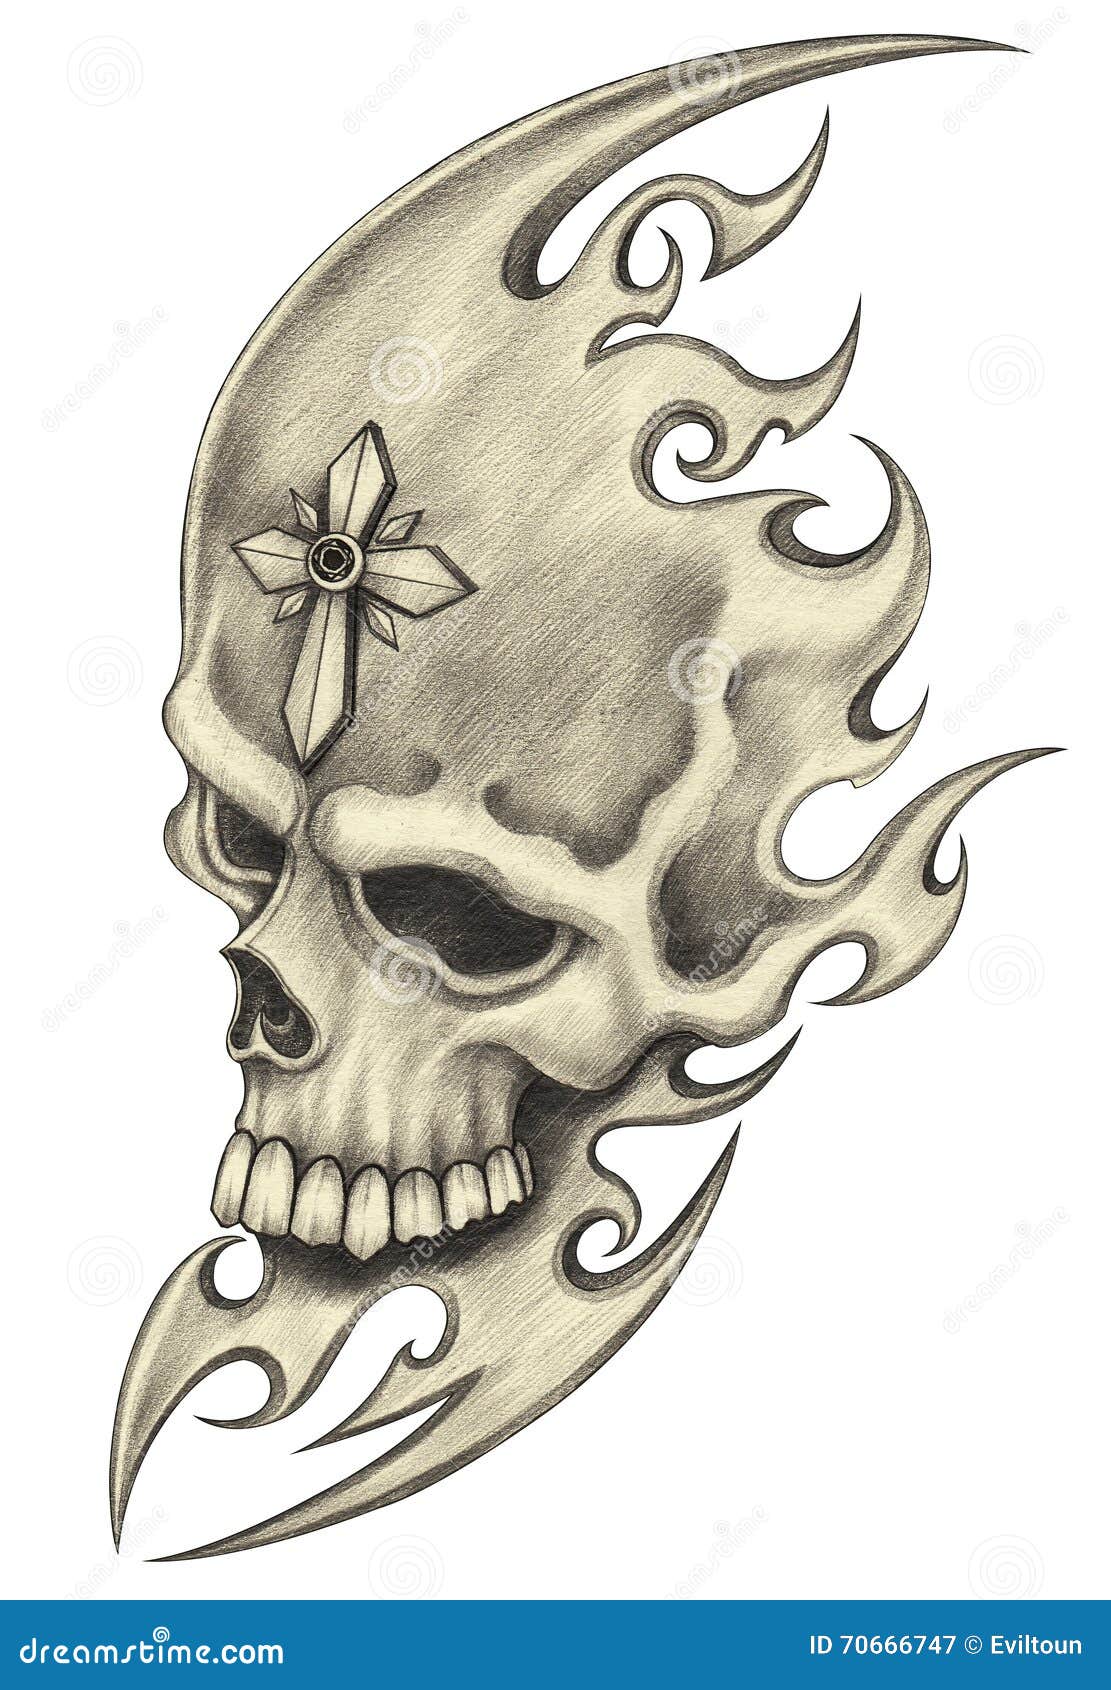 Pin by cris cris on projekty | Watch tattoo design, Skull sleeve tattoos,  Black and grey tattoos